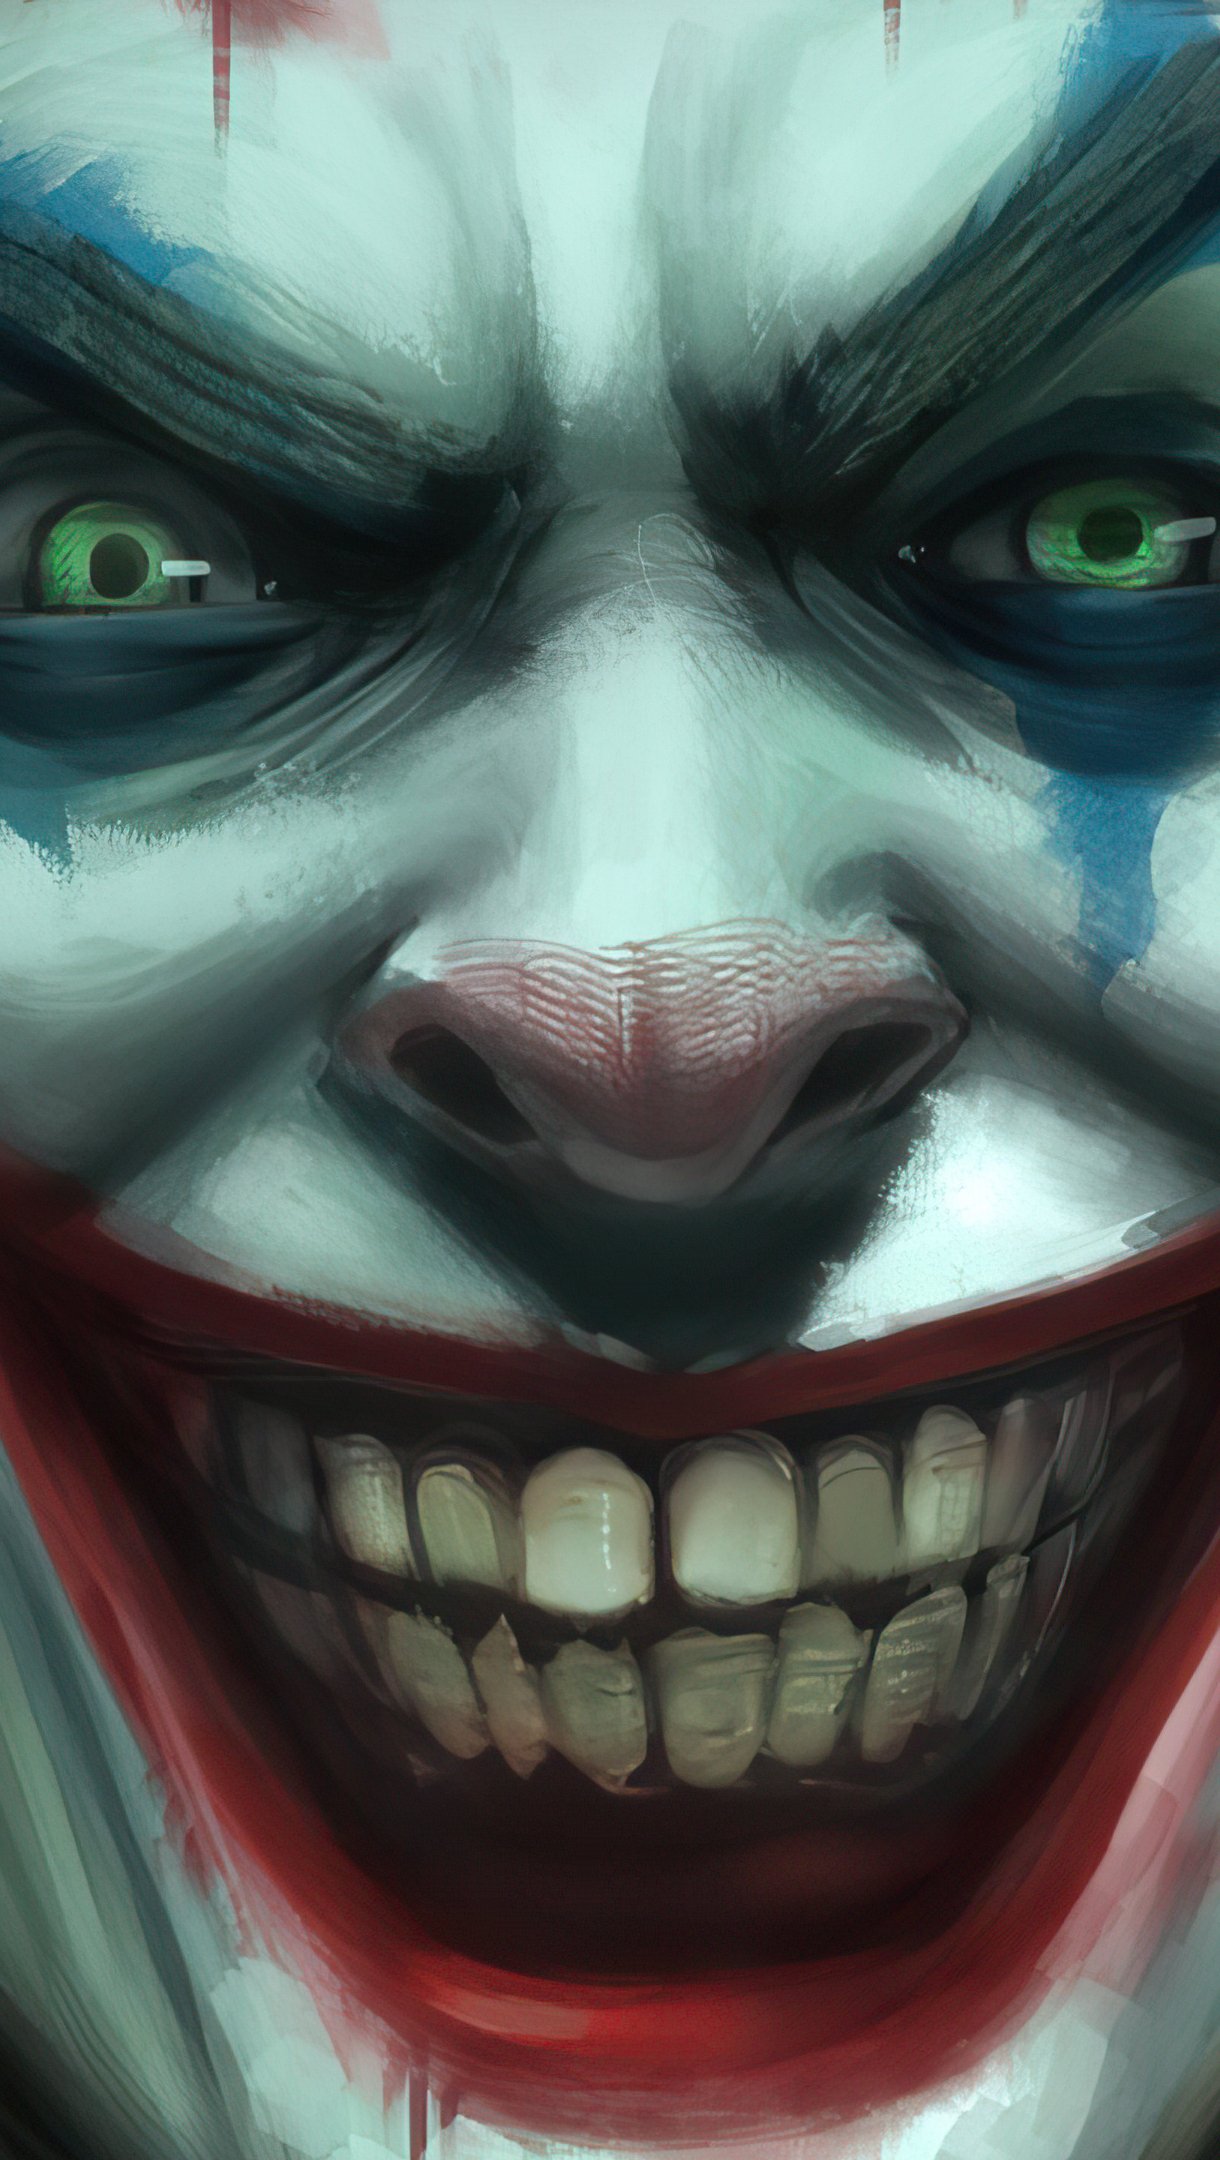 Creepy Joker Smile Wallpapers